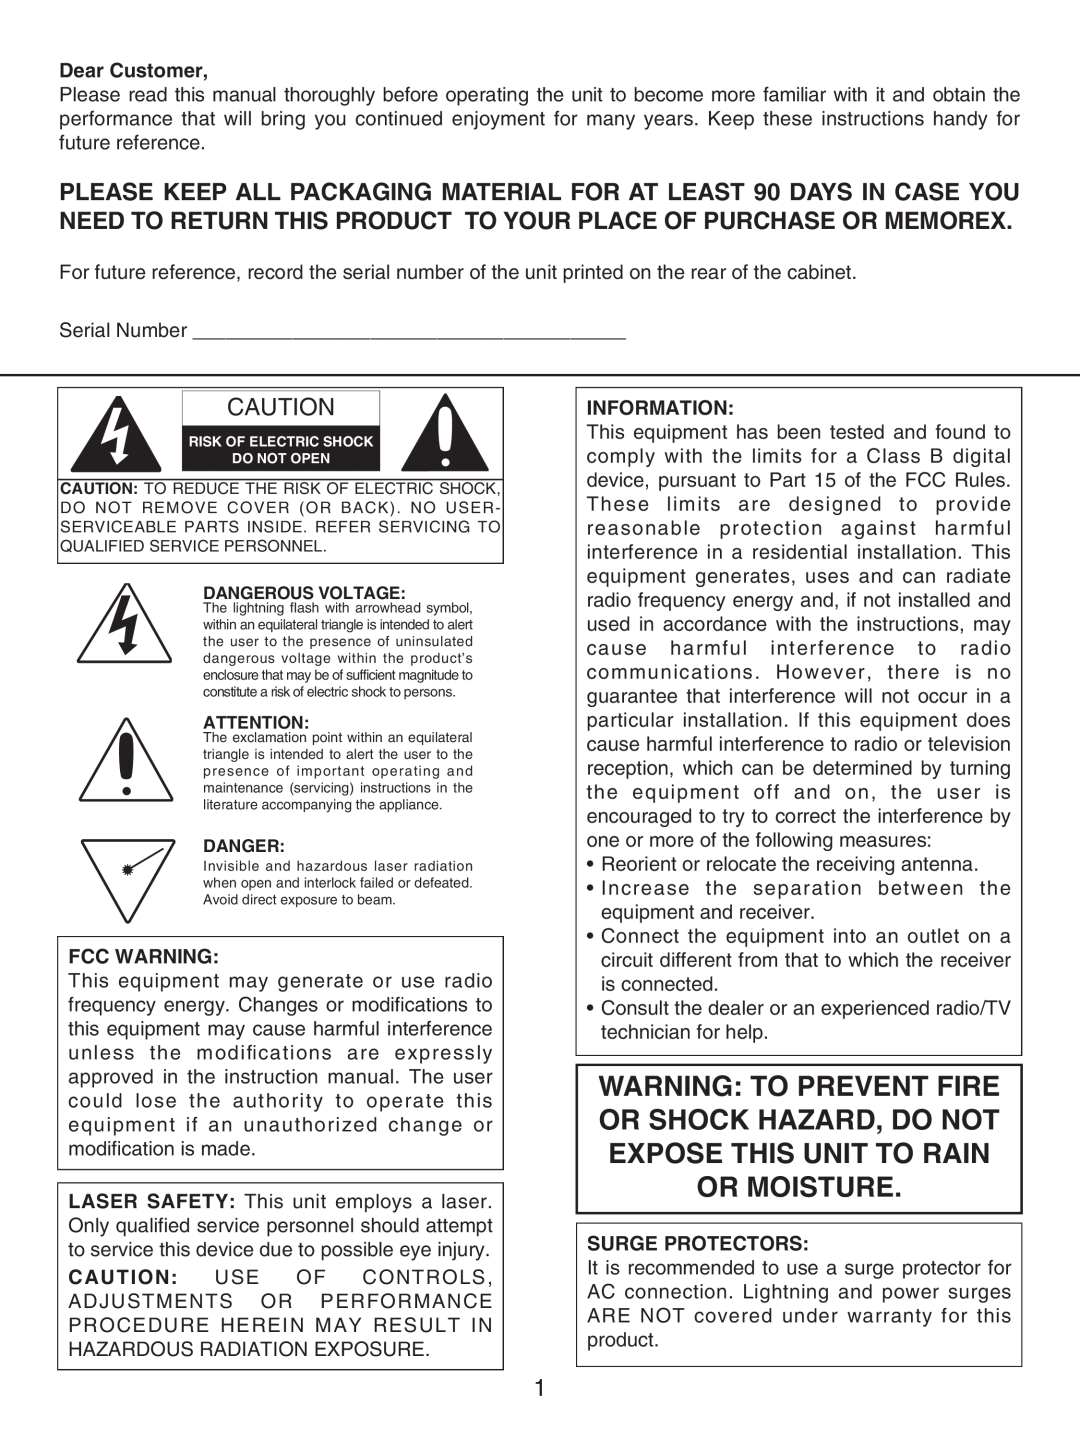 Memorex MP3227 manual Fcc Warning, Information, Surge Protectors 